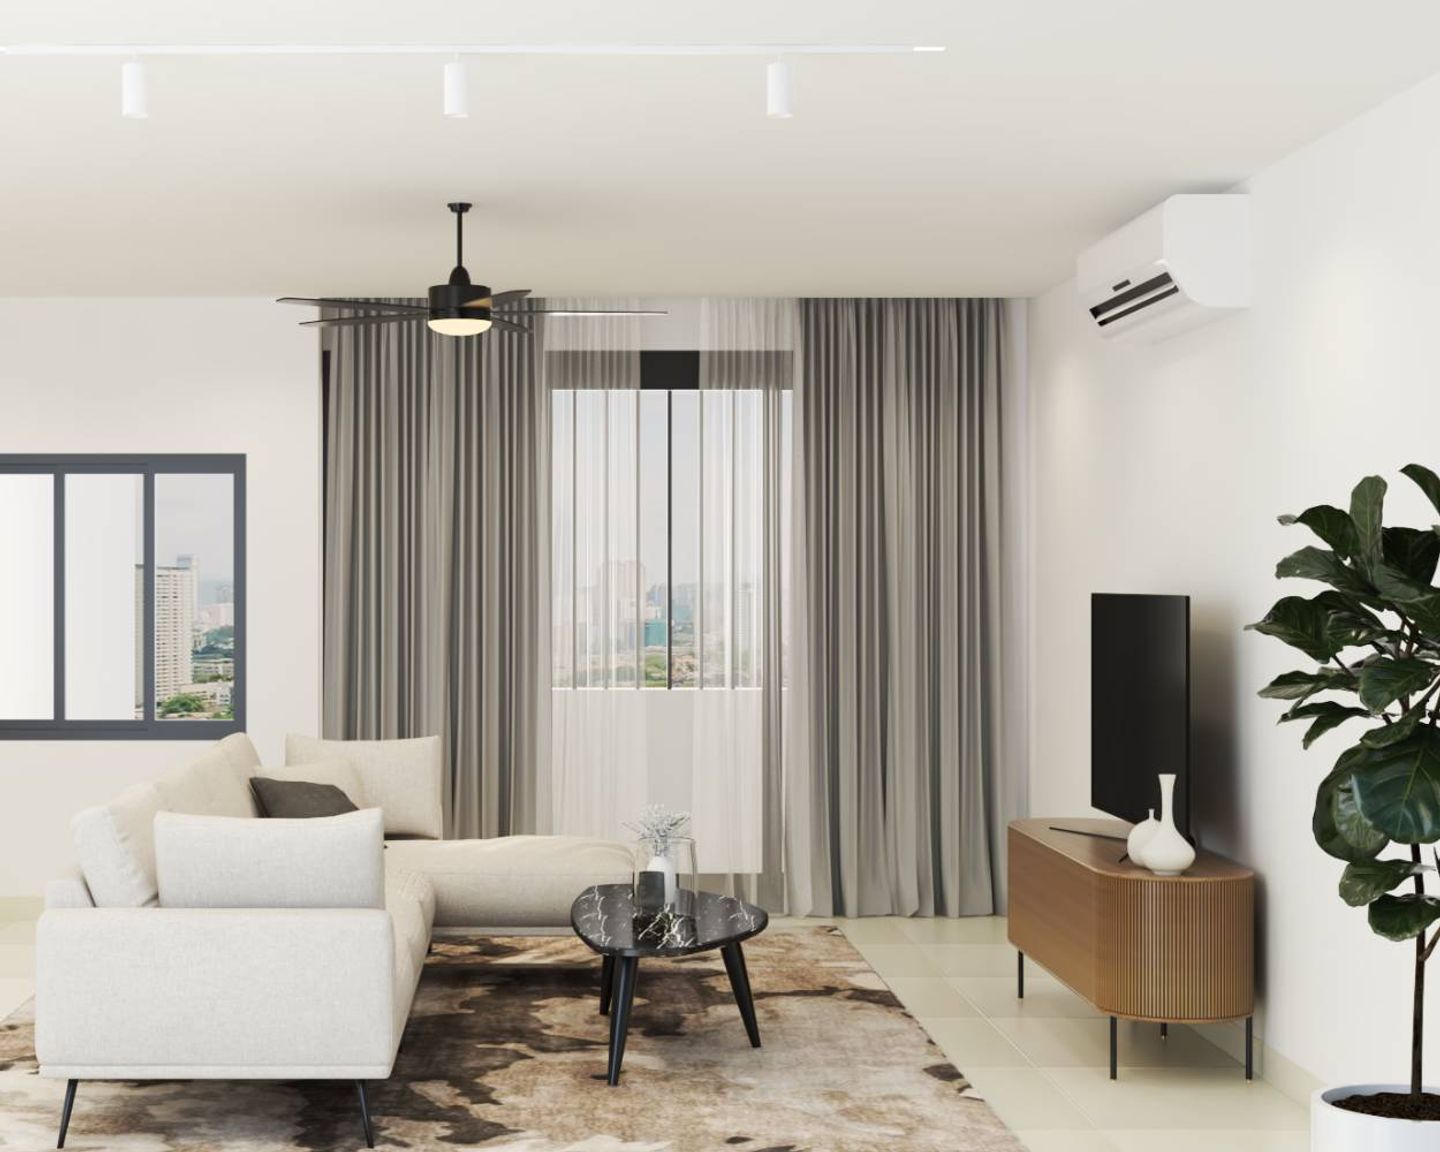 All-White Living Room Design With Scandinavian Aesthetics - Livspace